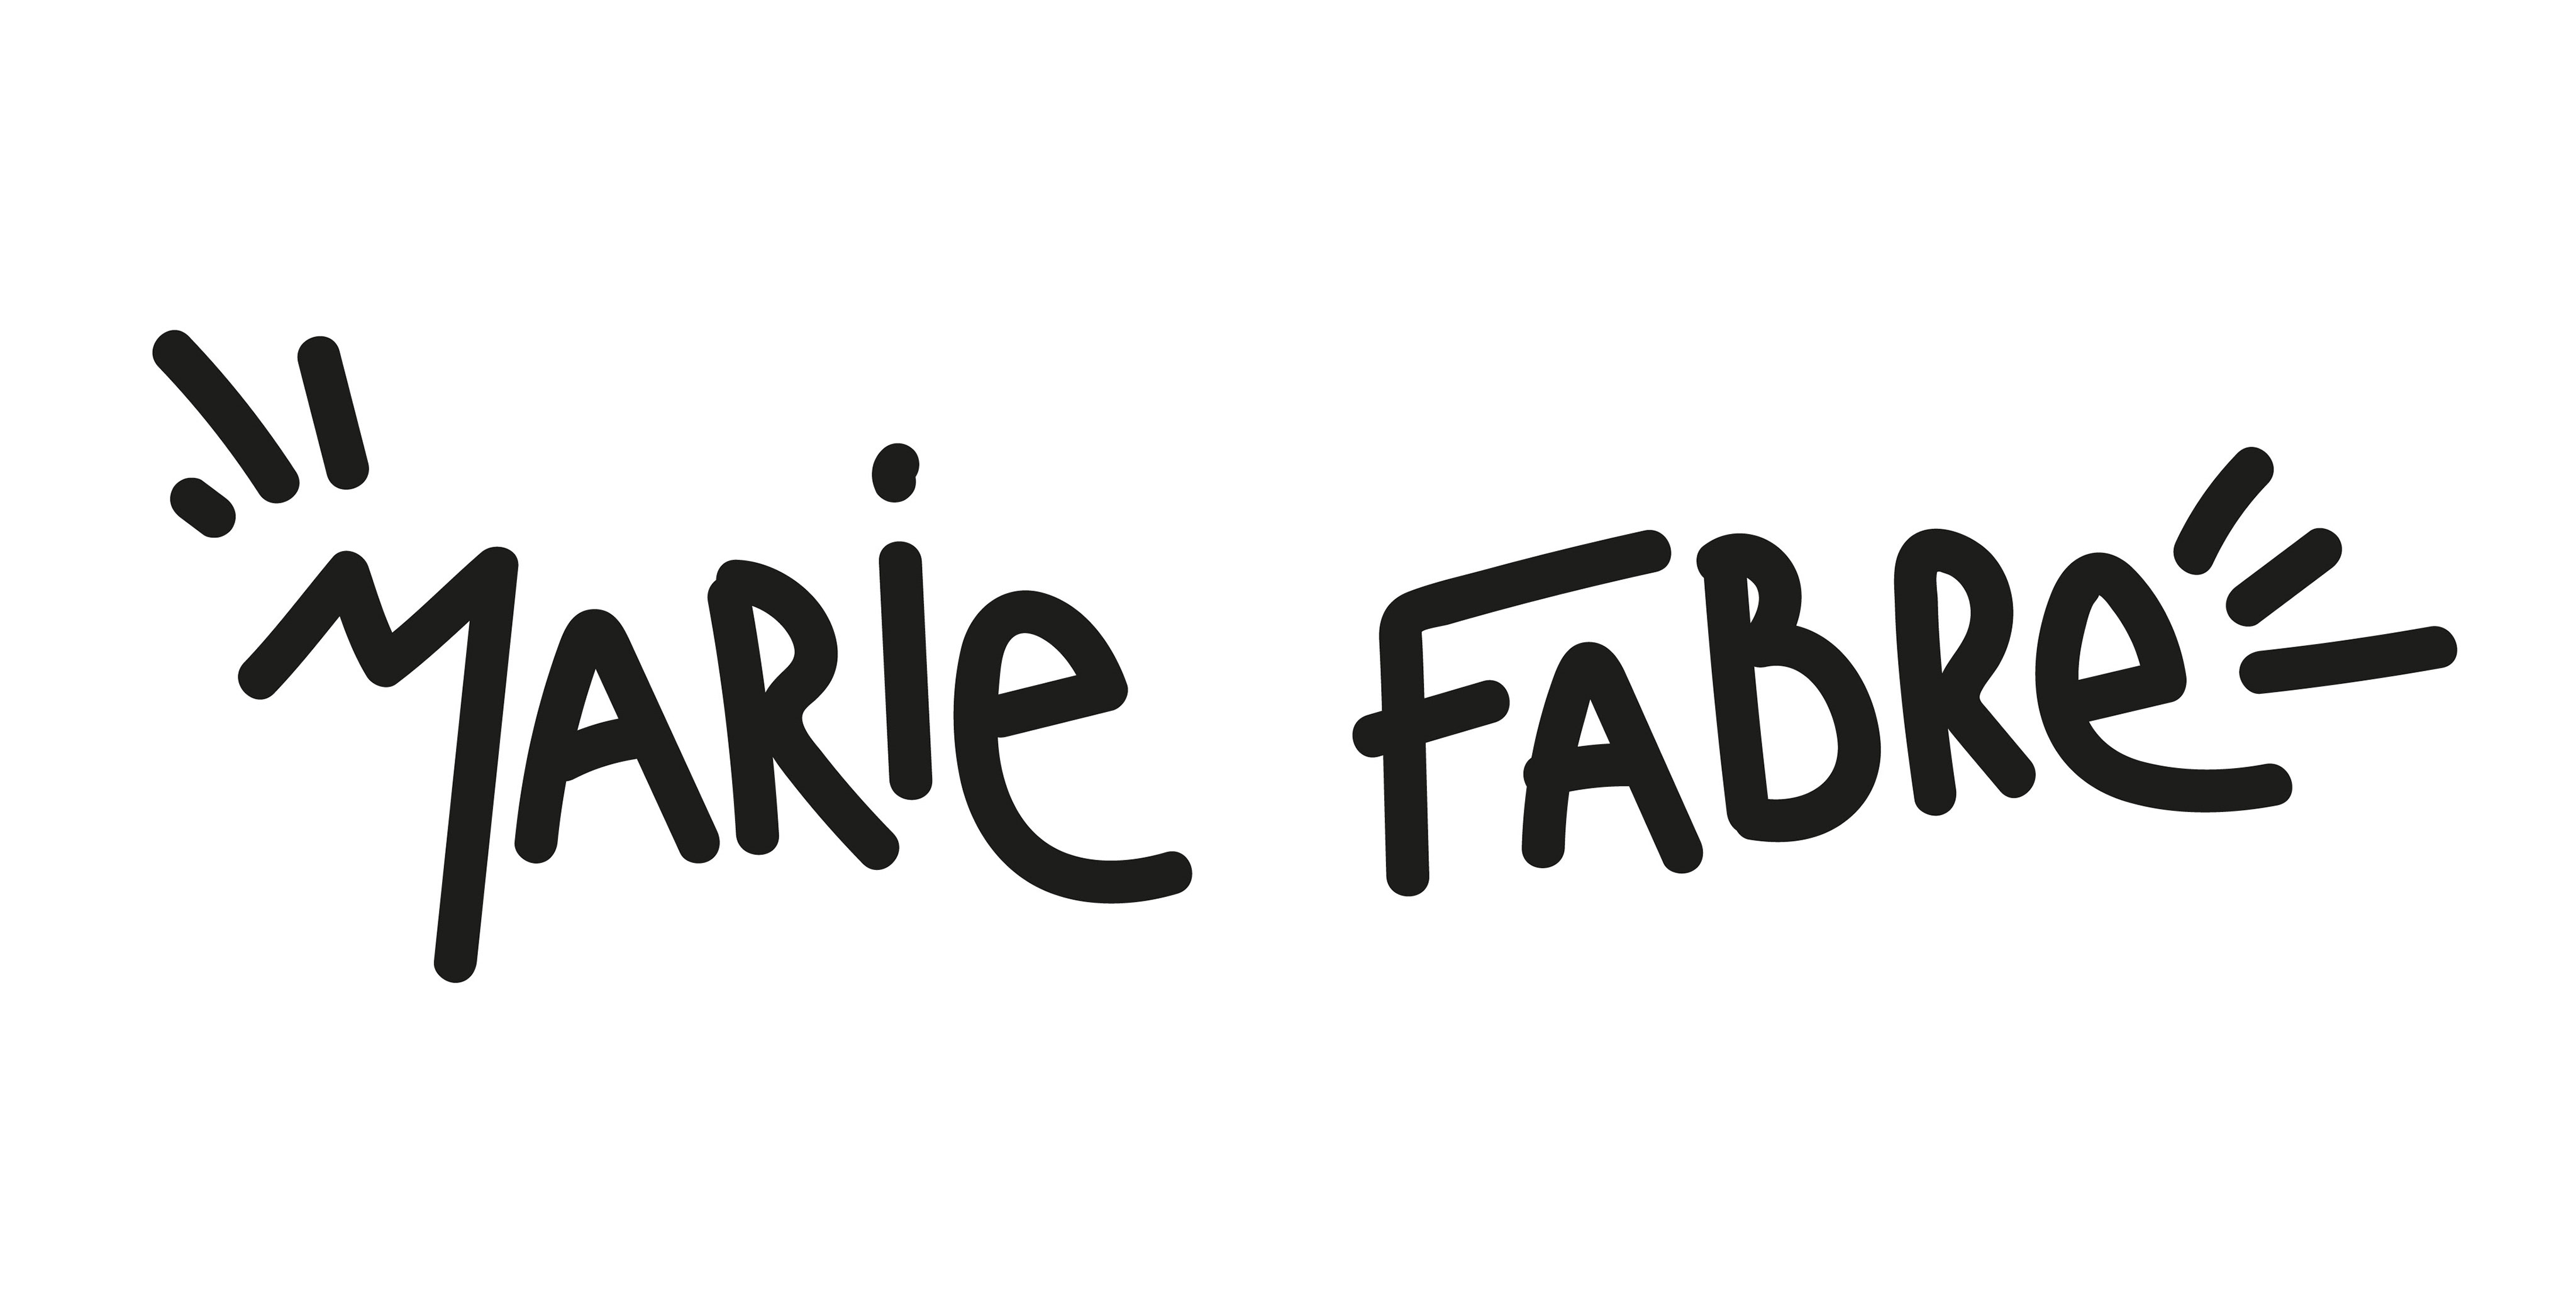 Marie Fabre